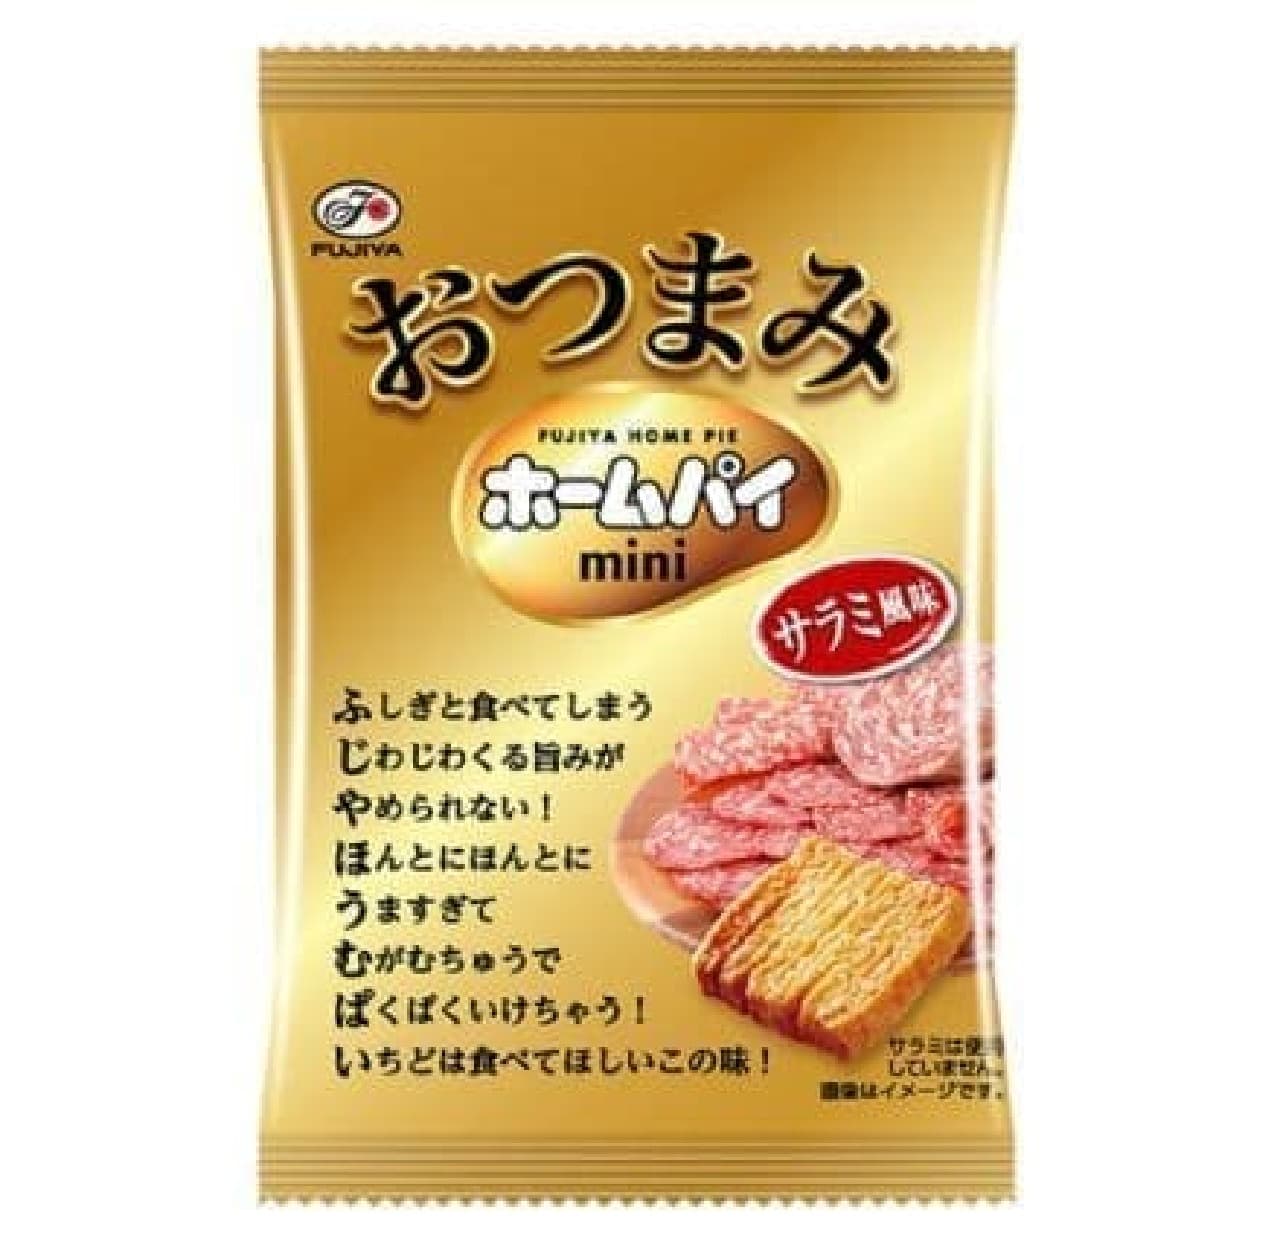 Fujiya snacks home pie salami flavor